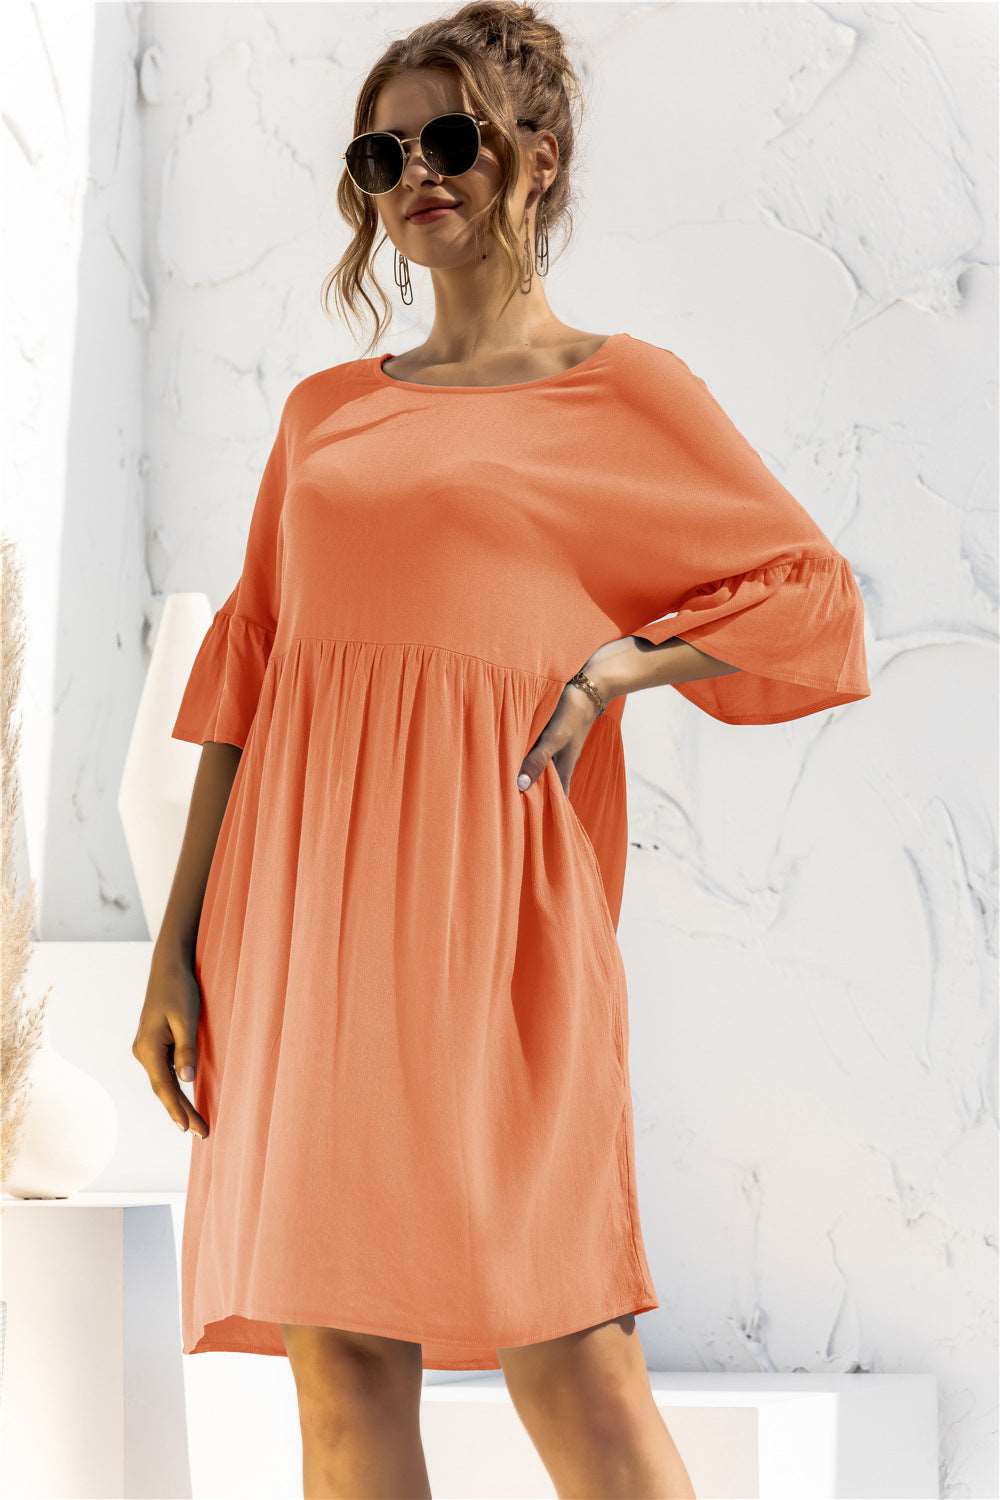 Boat Neck Flounce Sleeve Knee-Length Dress (2 Colors)  Krazy Heart Designs Boutique   